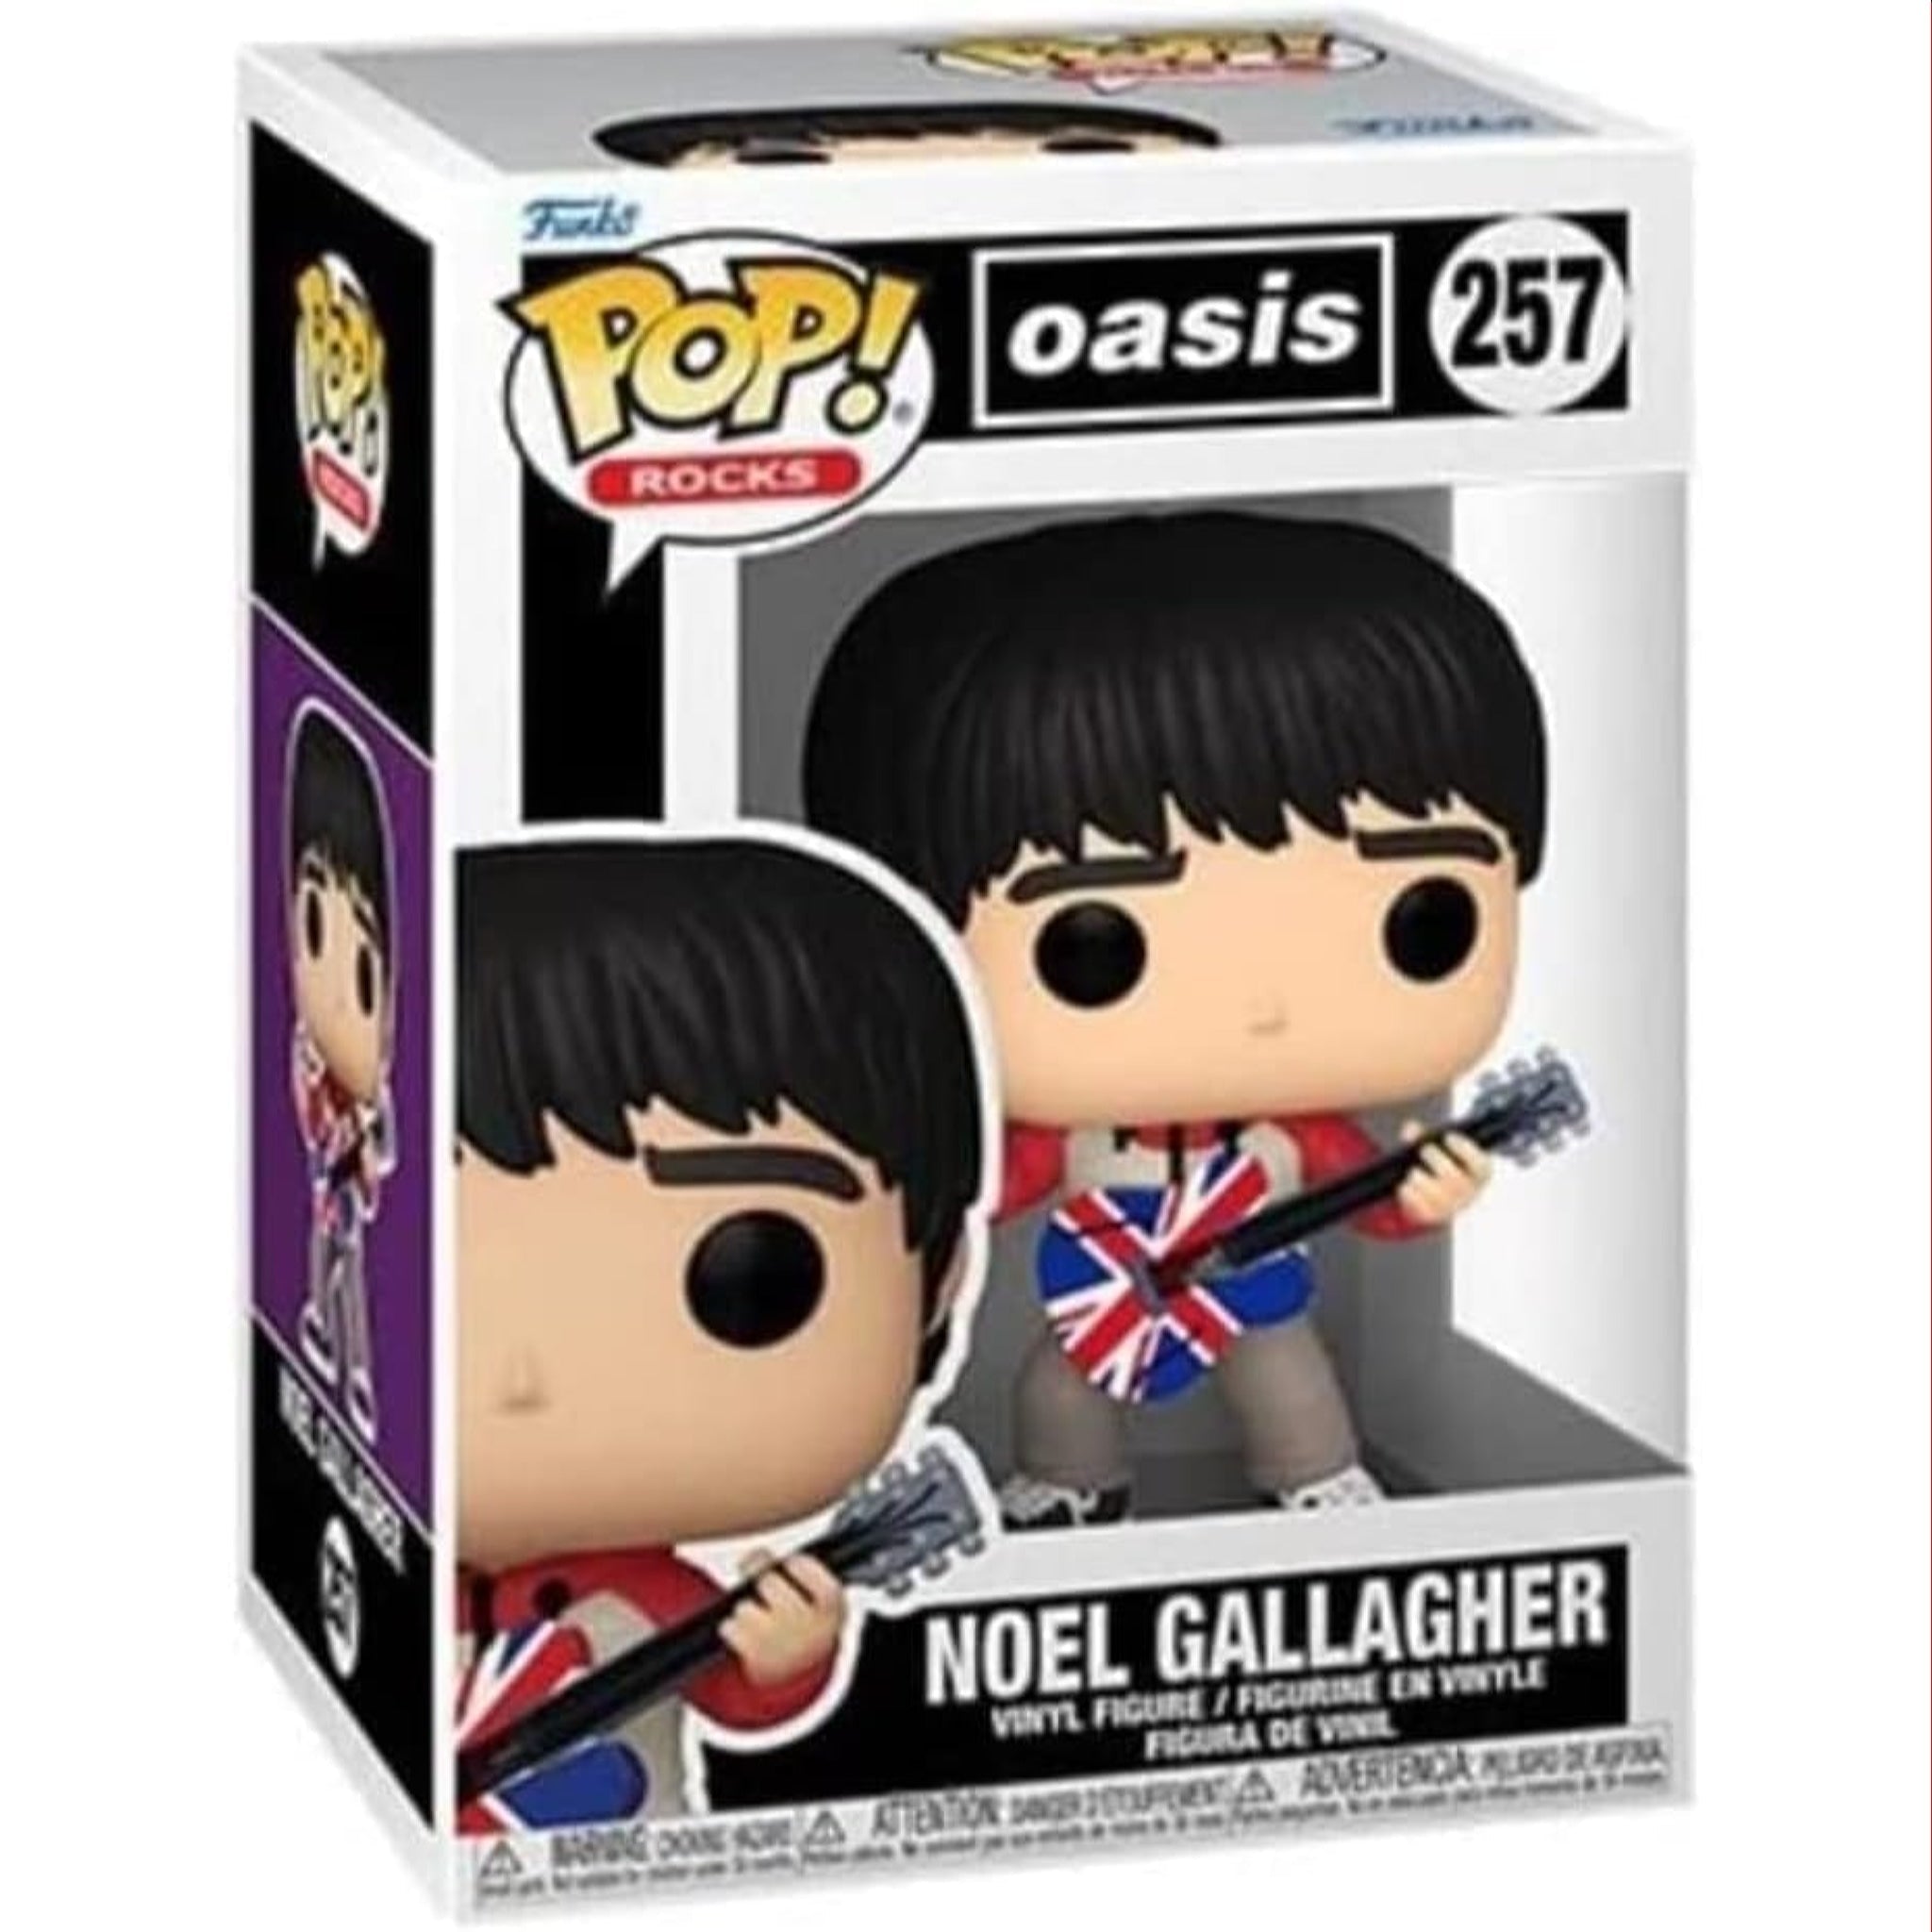 Oasis Noel Gallagher Funko Pop! Vinyl Figure DAMAGED BOX